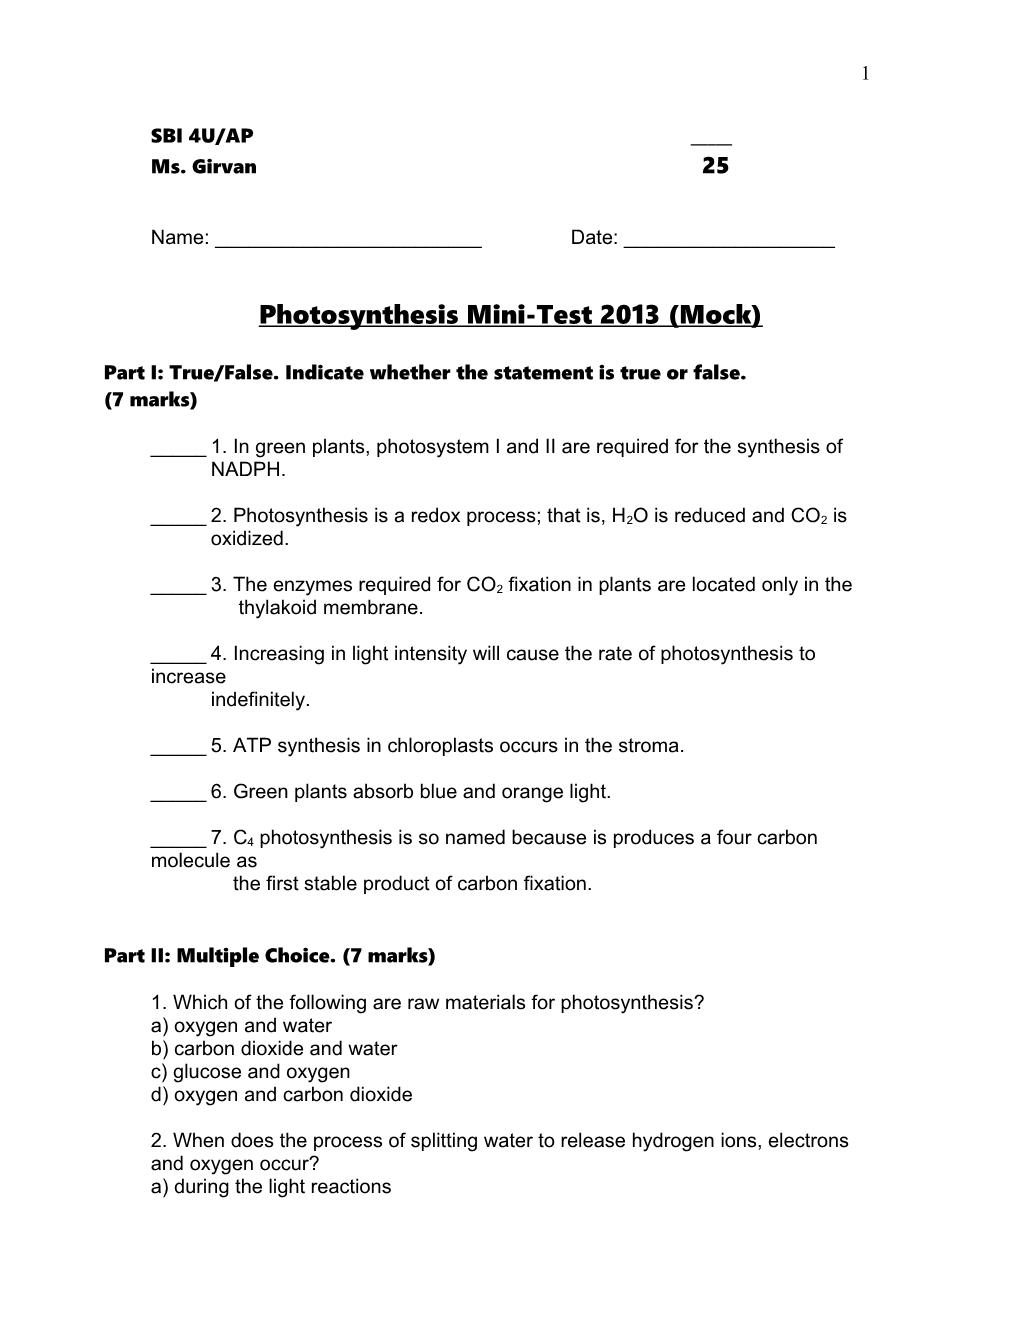 Photosynthesis Mini-Test 2013 (Mock)